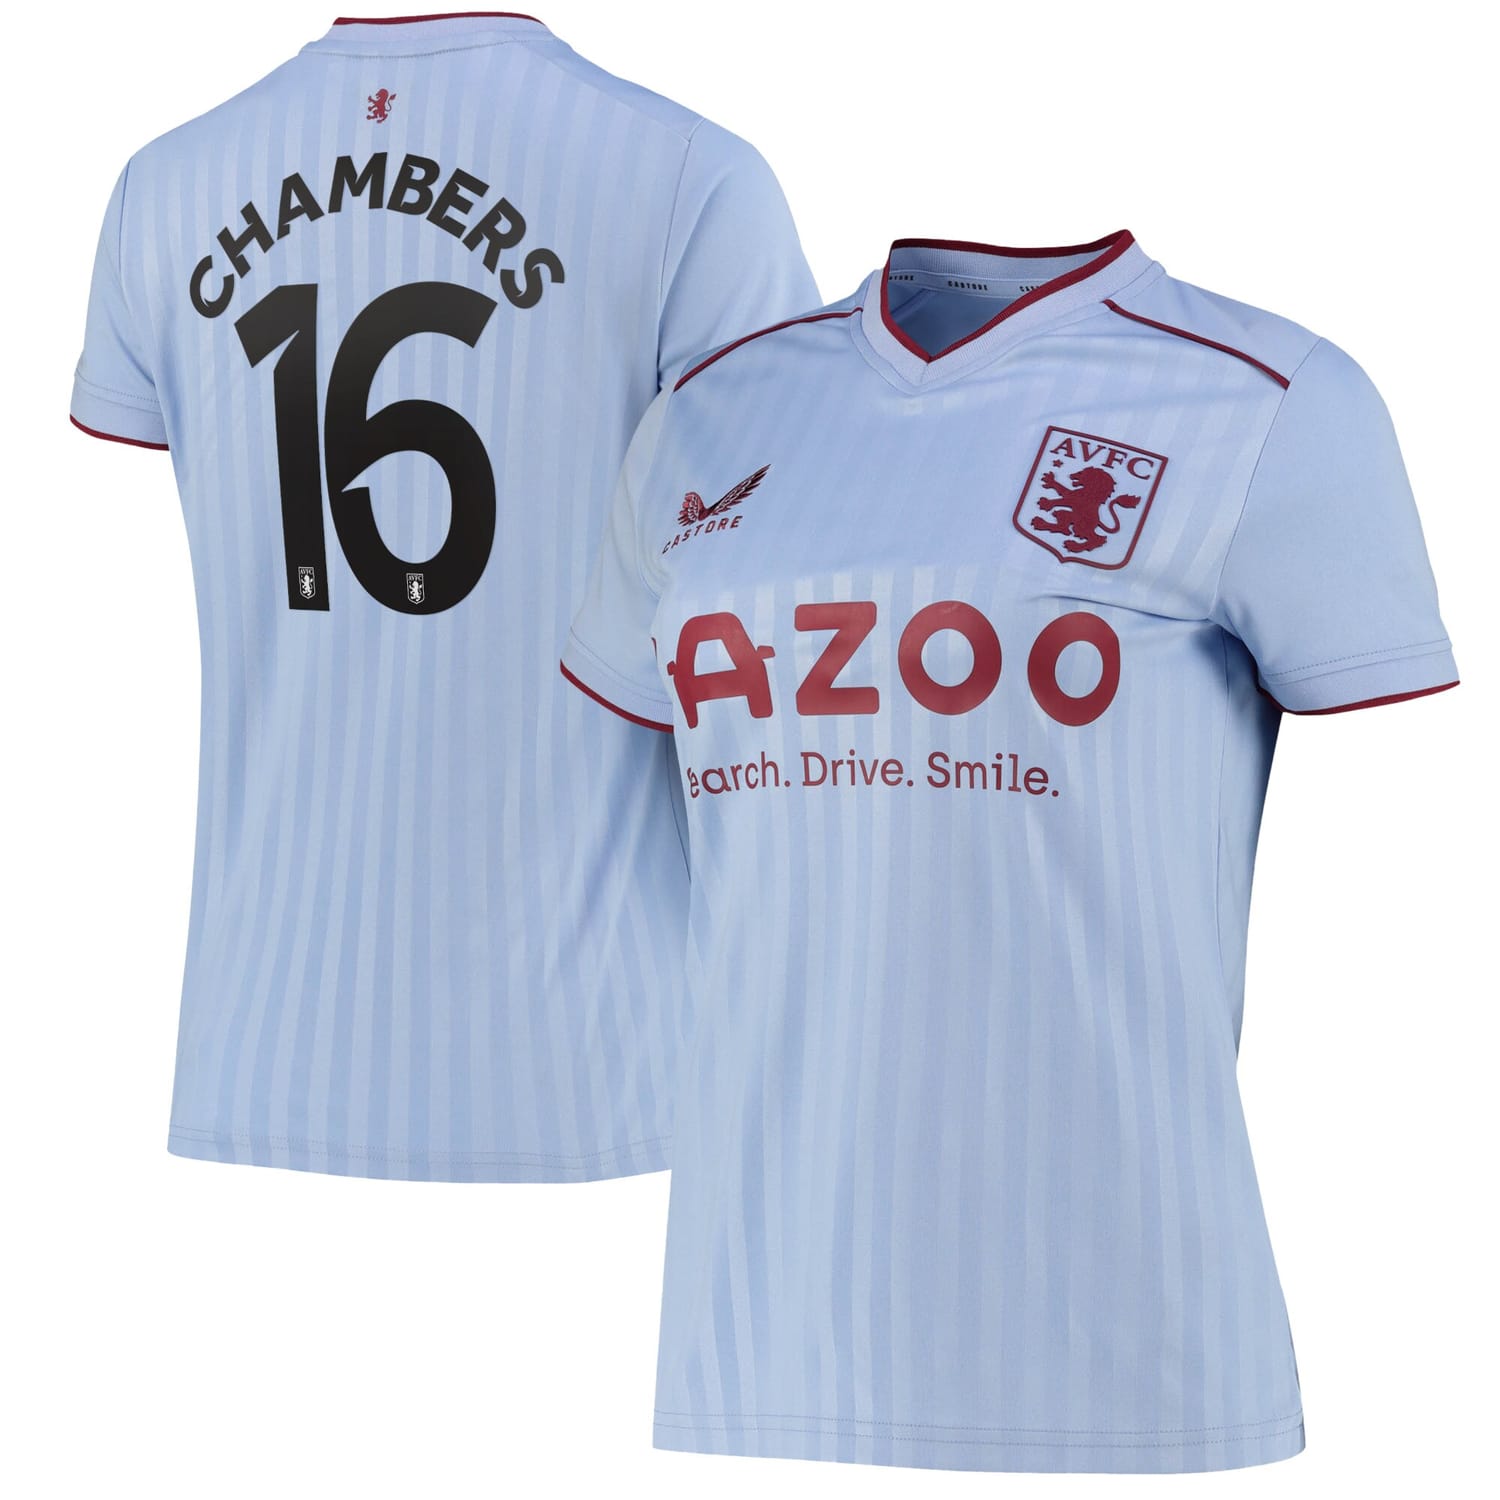 Premier League Aston Villa Away Cup Jersey Shirt 2022-23 player Calum Chambers 16 printing for Women